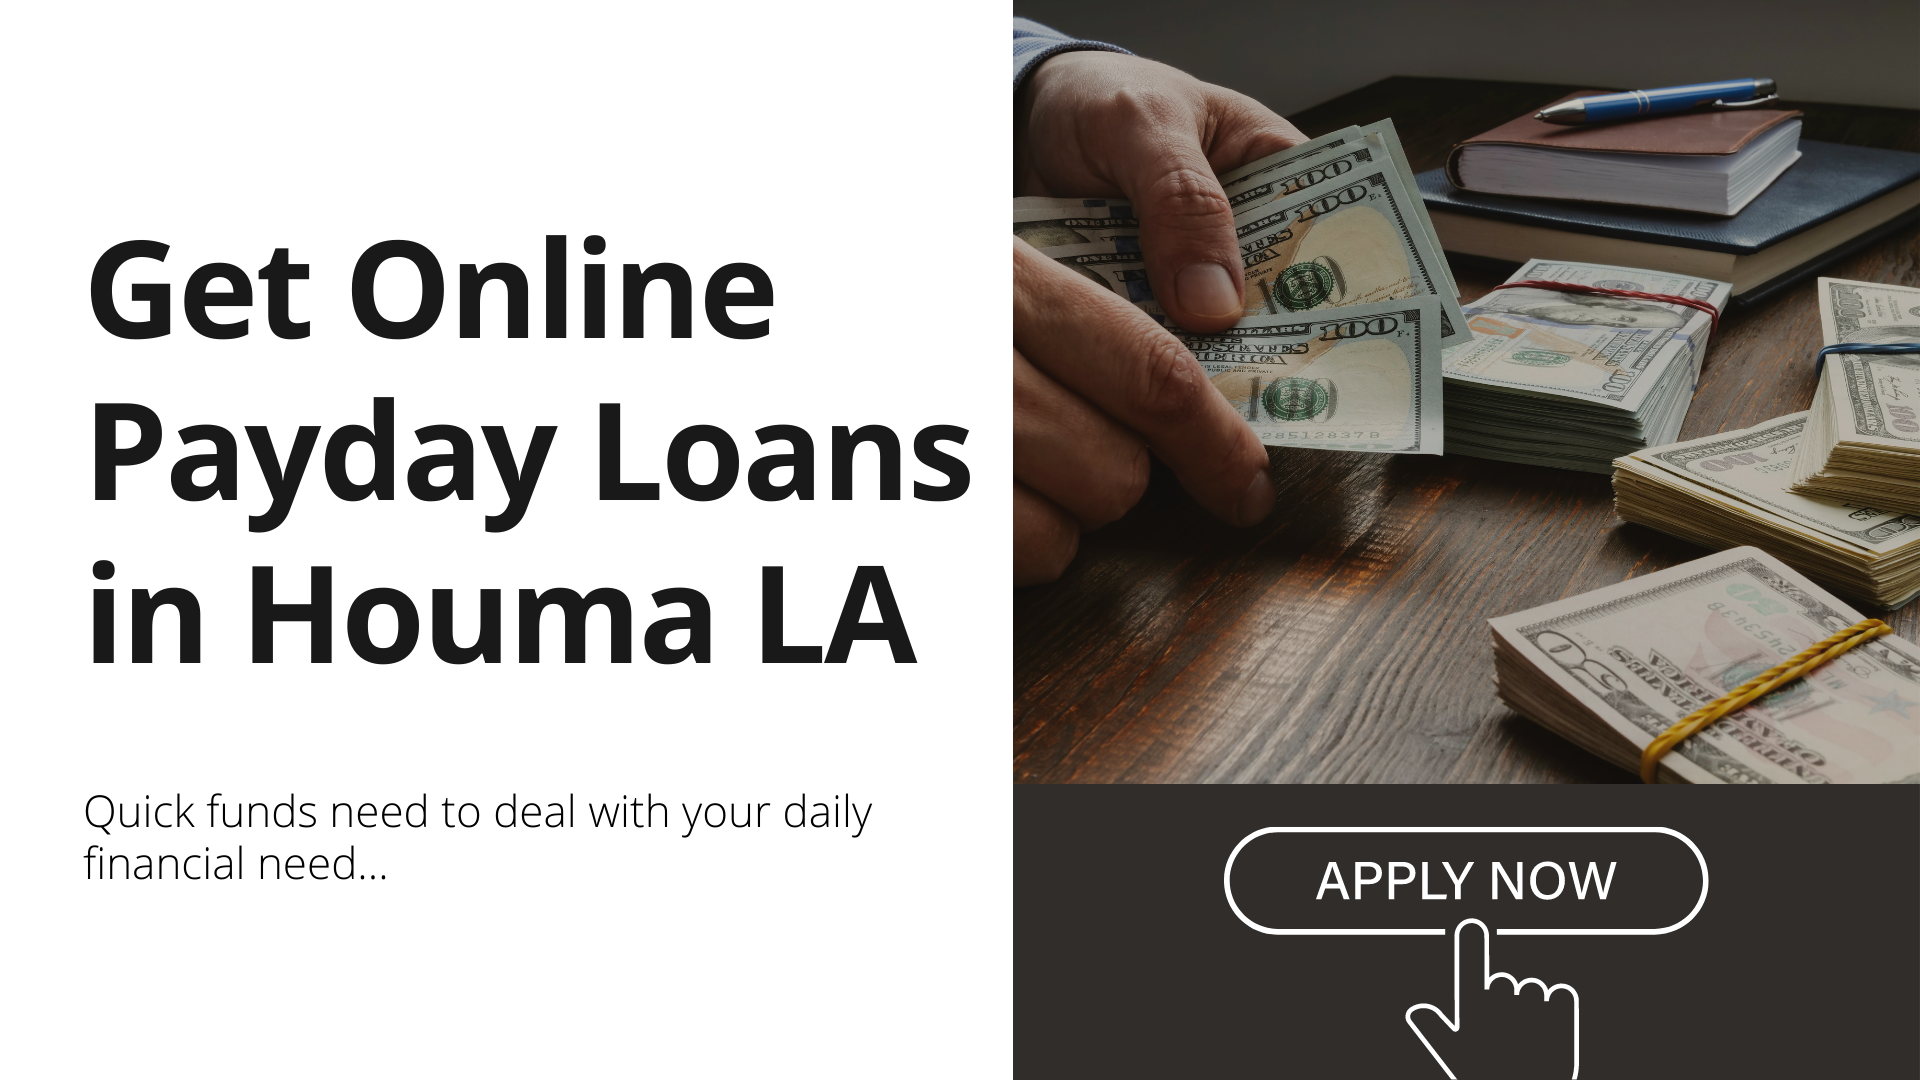 Getting Online Payday Loans in Houma LA